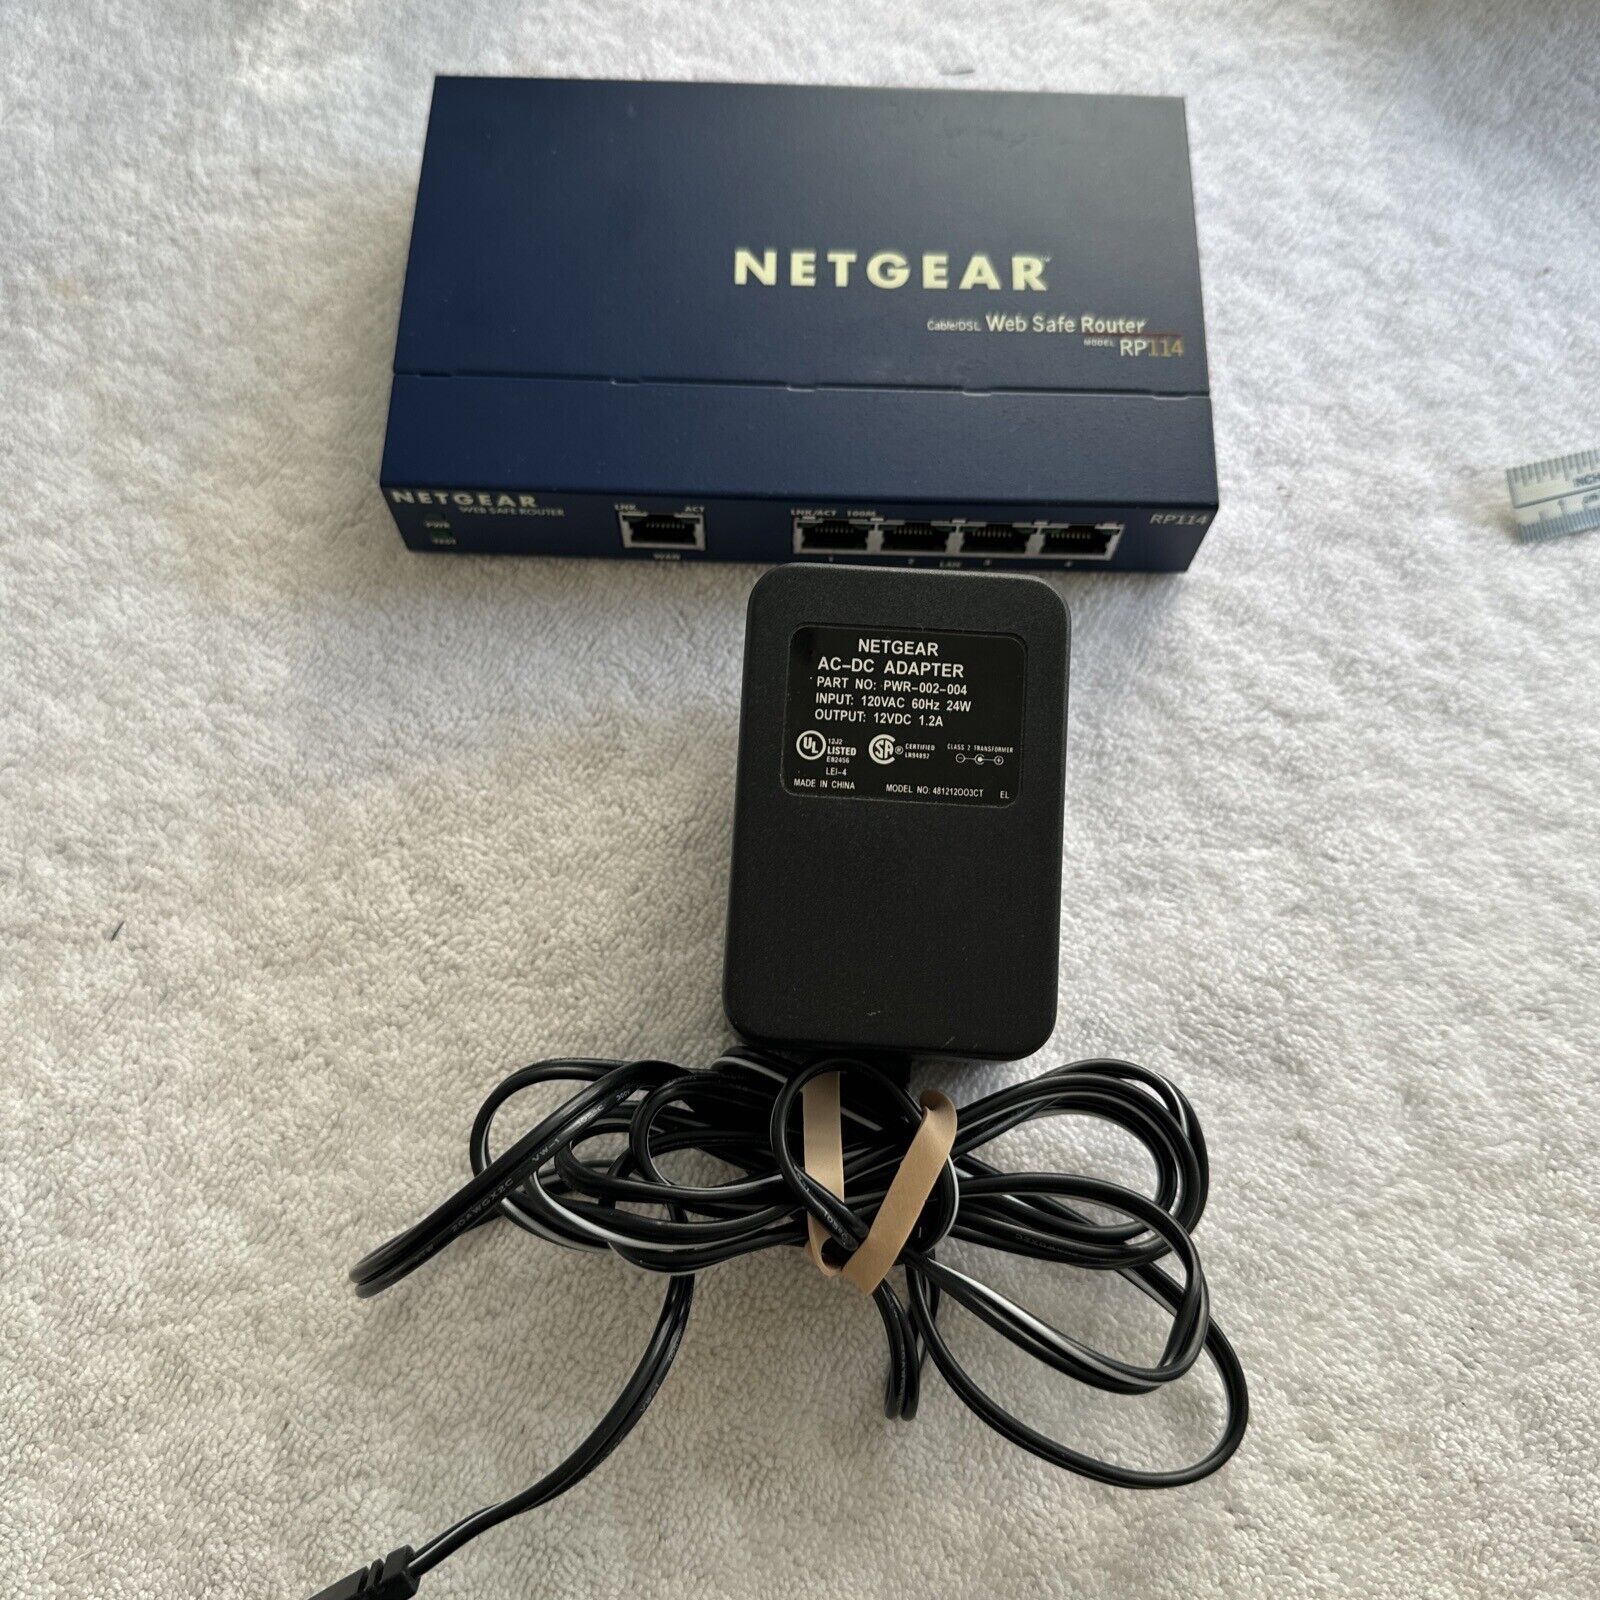 NETGEAR RP114 Web Safe Router 100 Mbps 4-Port 10/100 Wireless Router